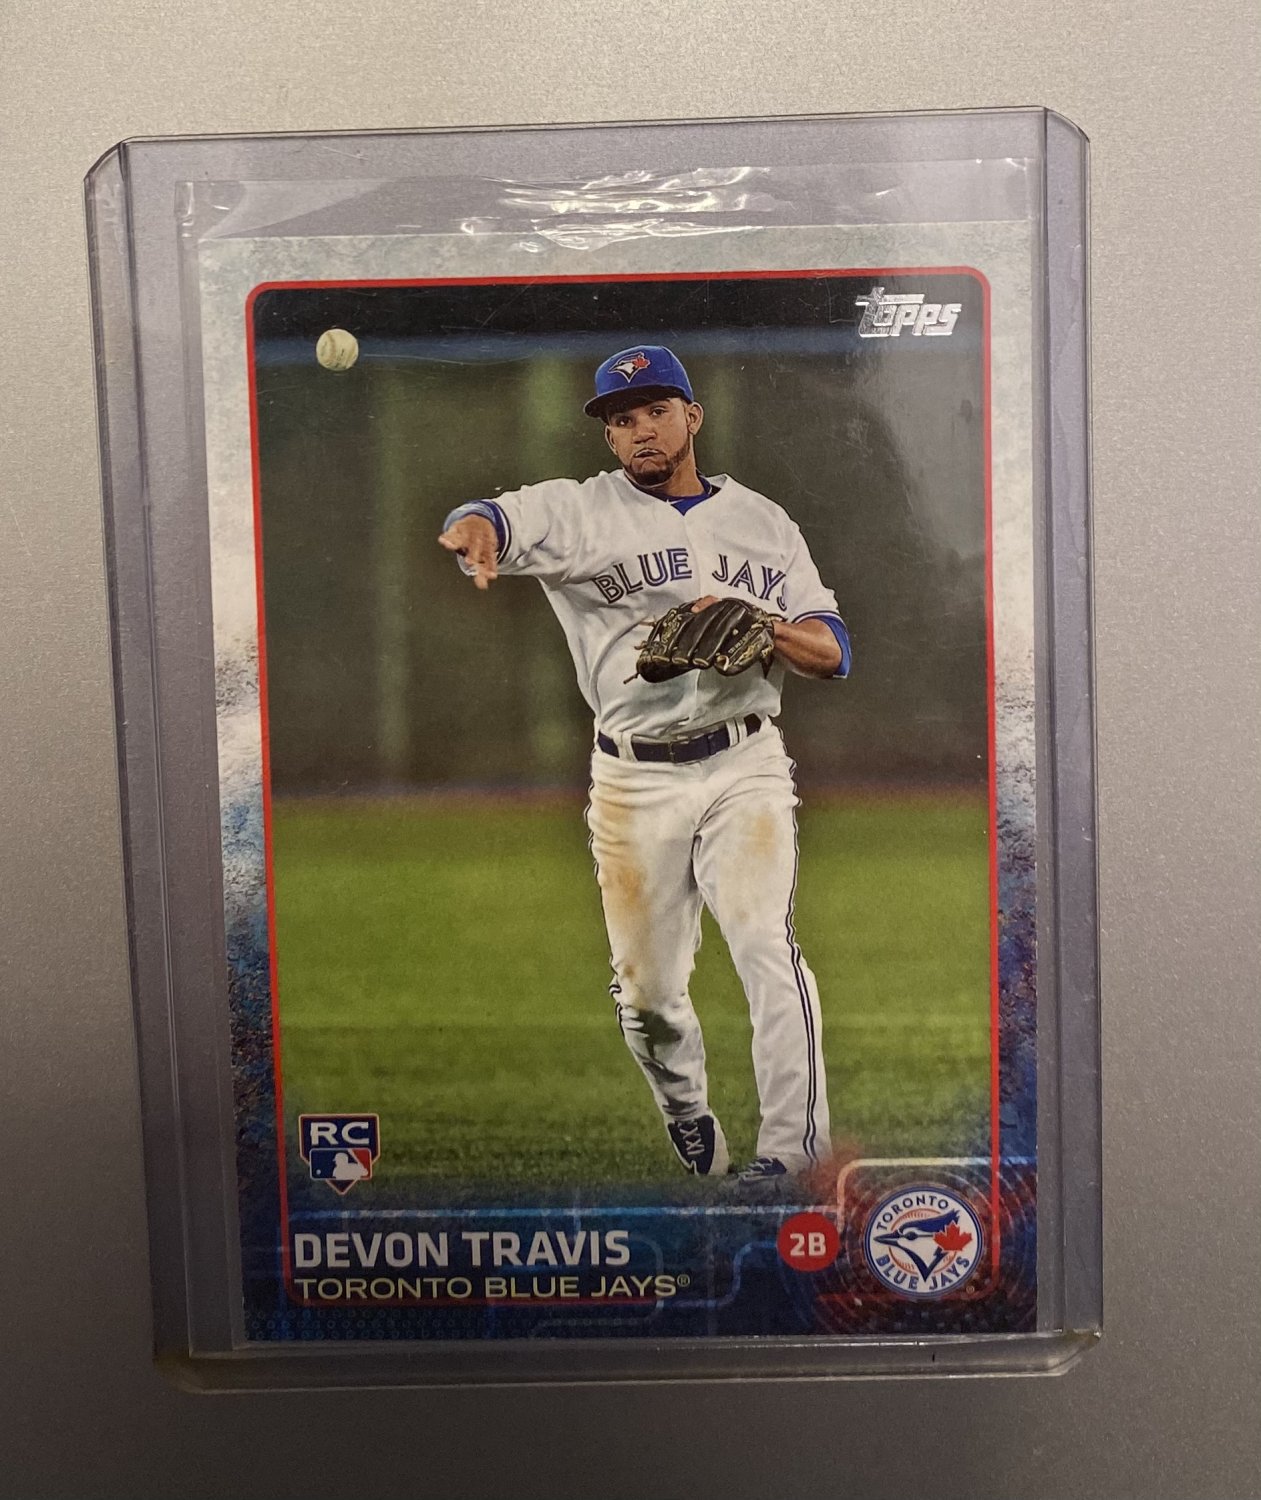 2015 Topps Devon Travis #571 RC